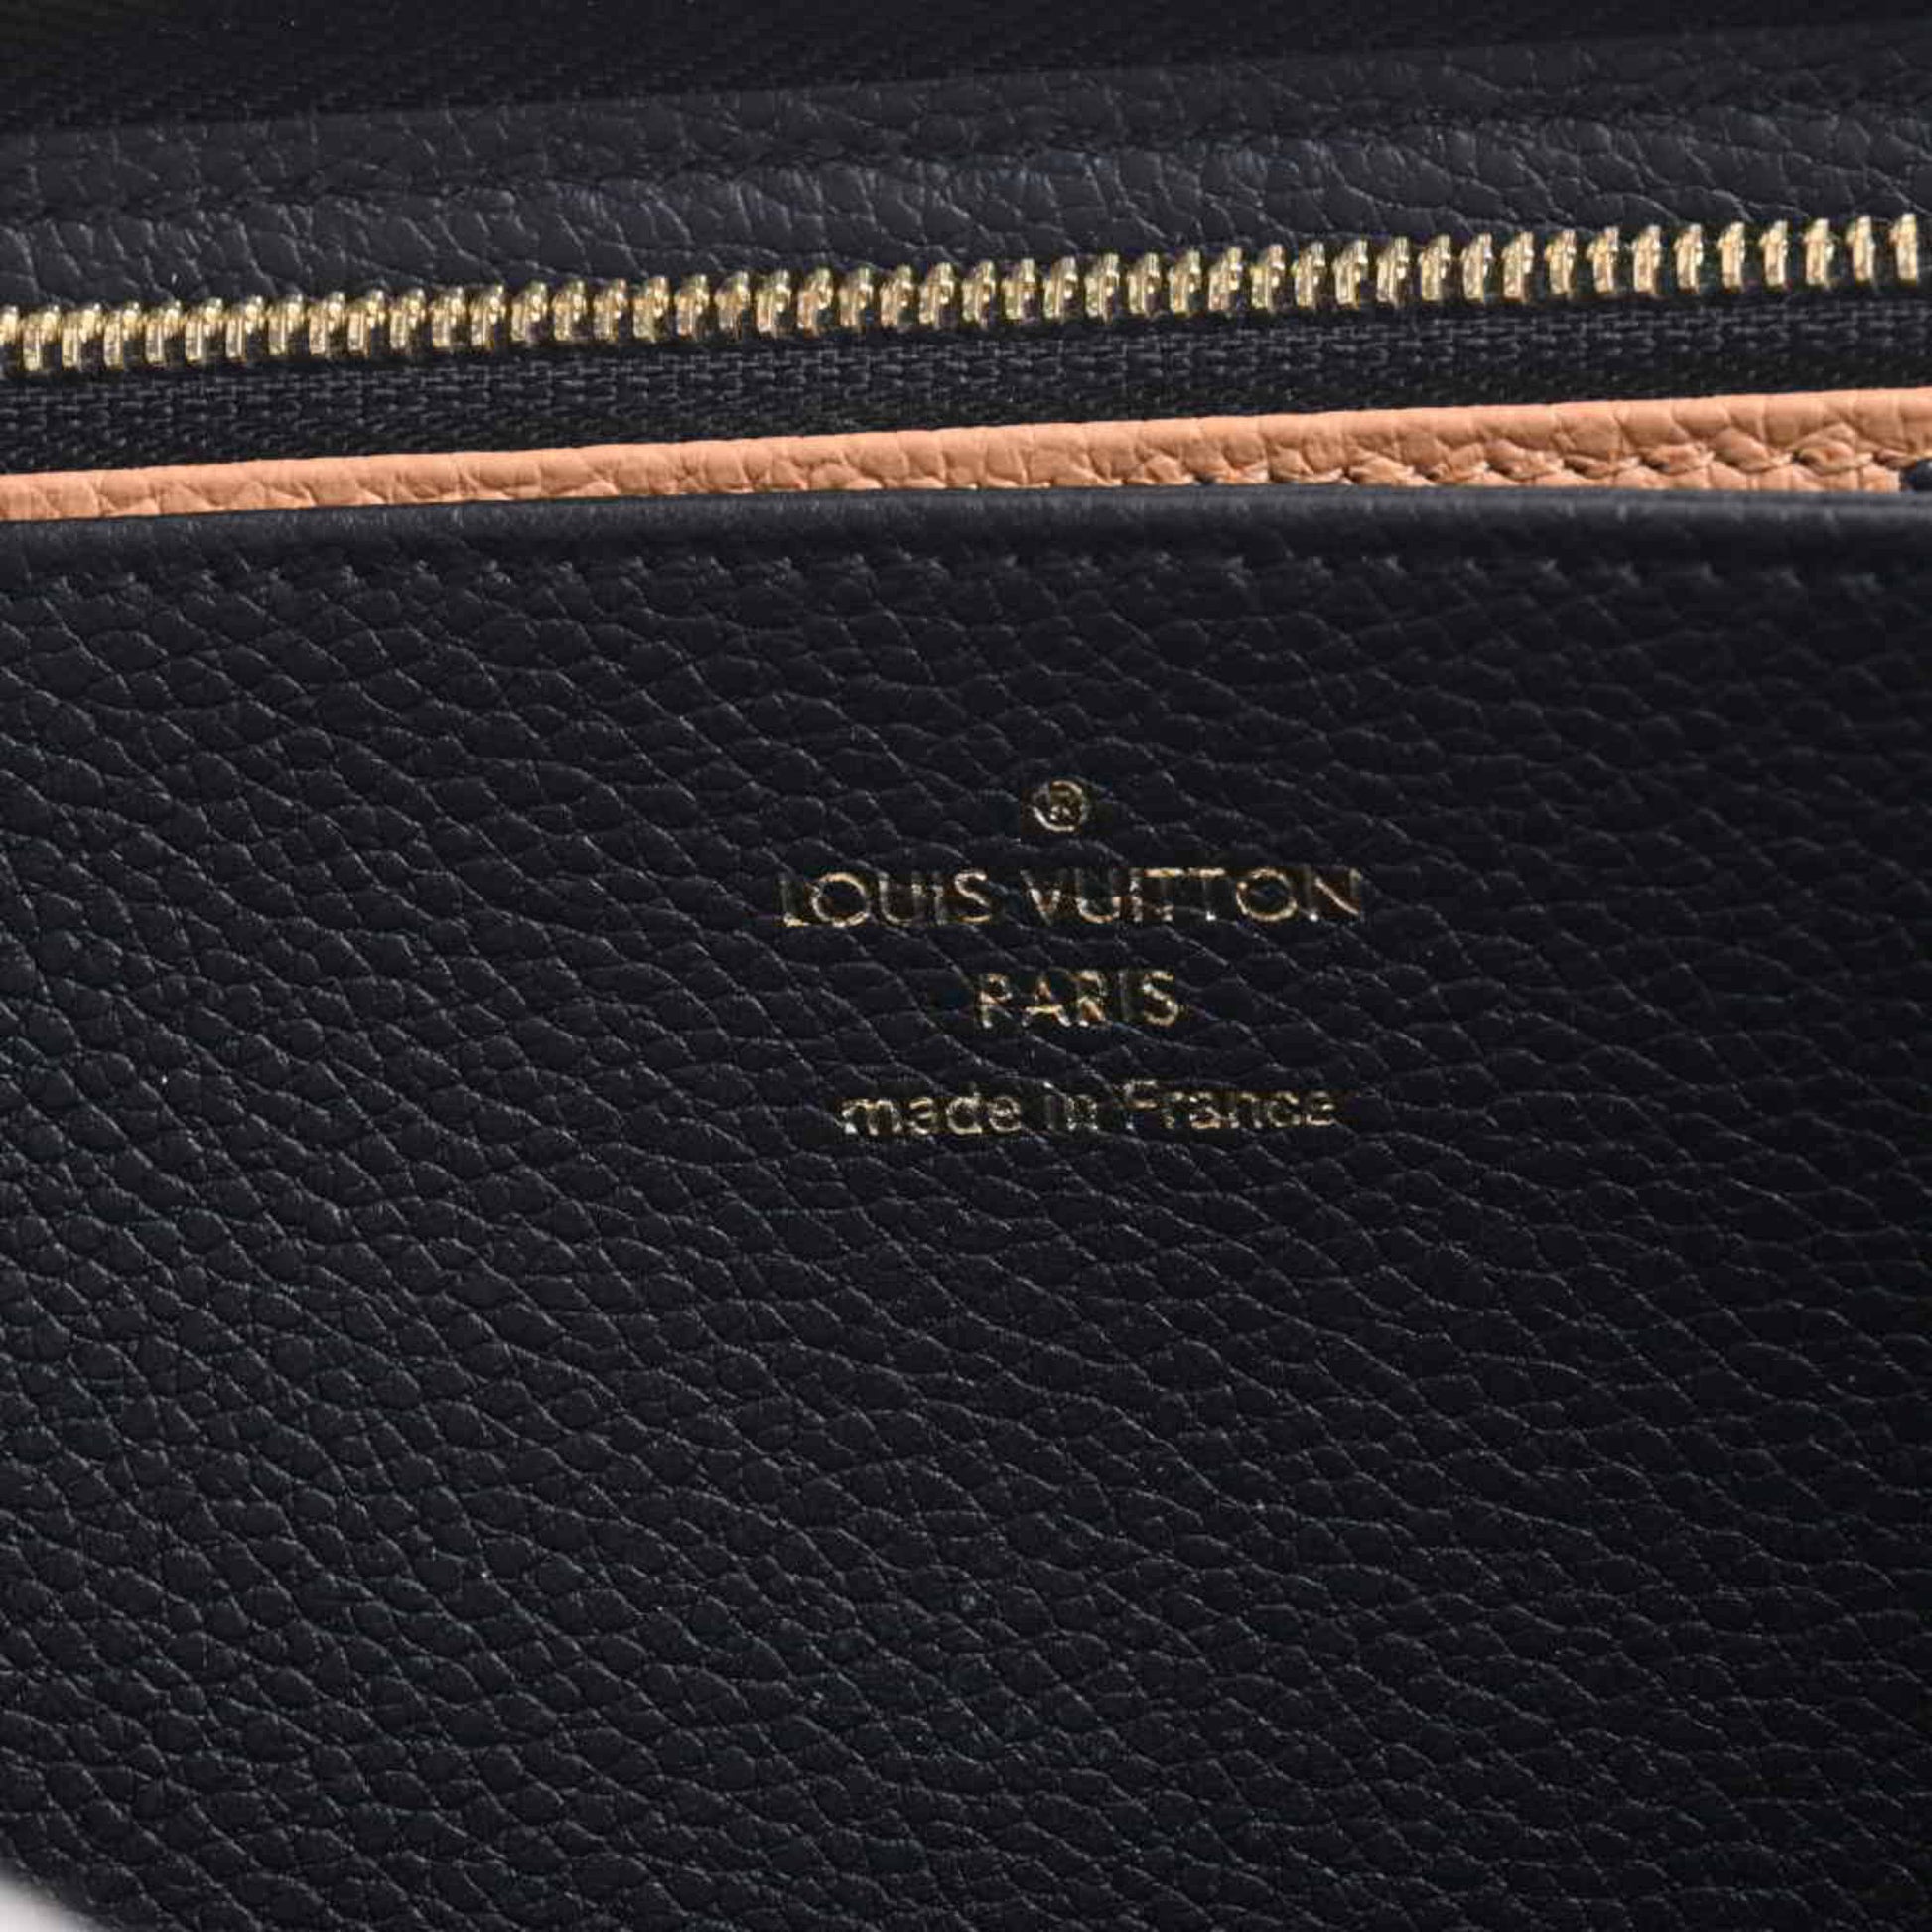 M80680 Louis Vuitton Wild at Heart Zippy Wallet